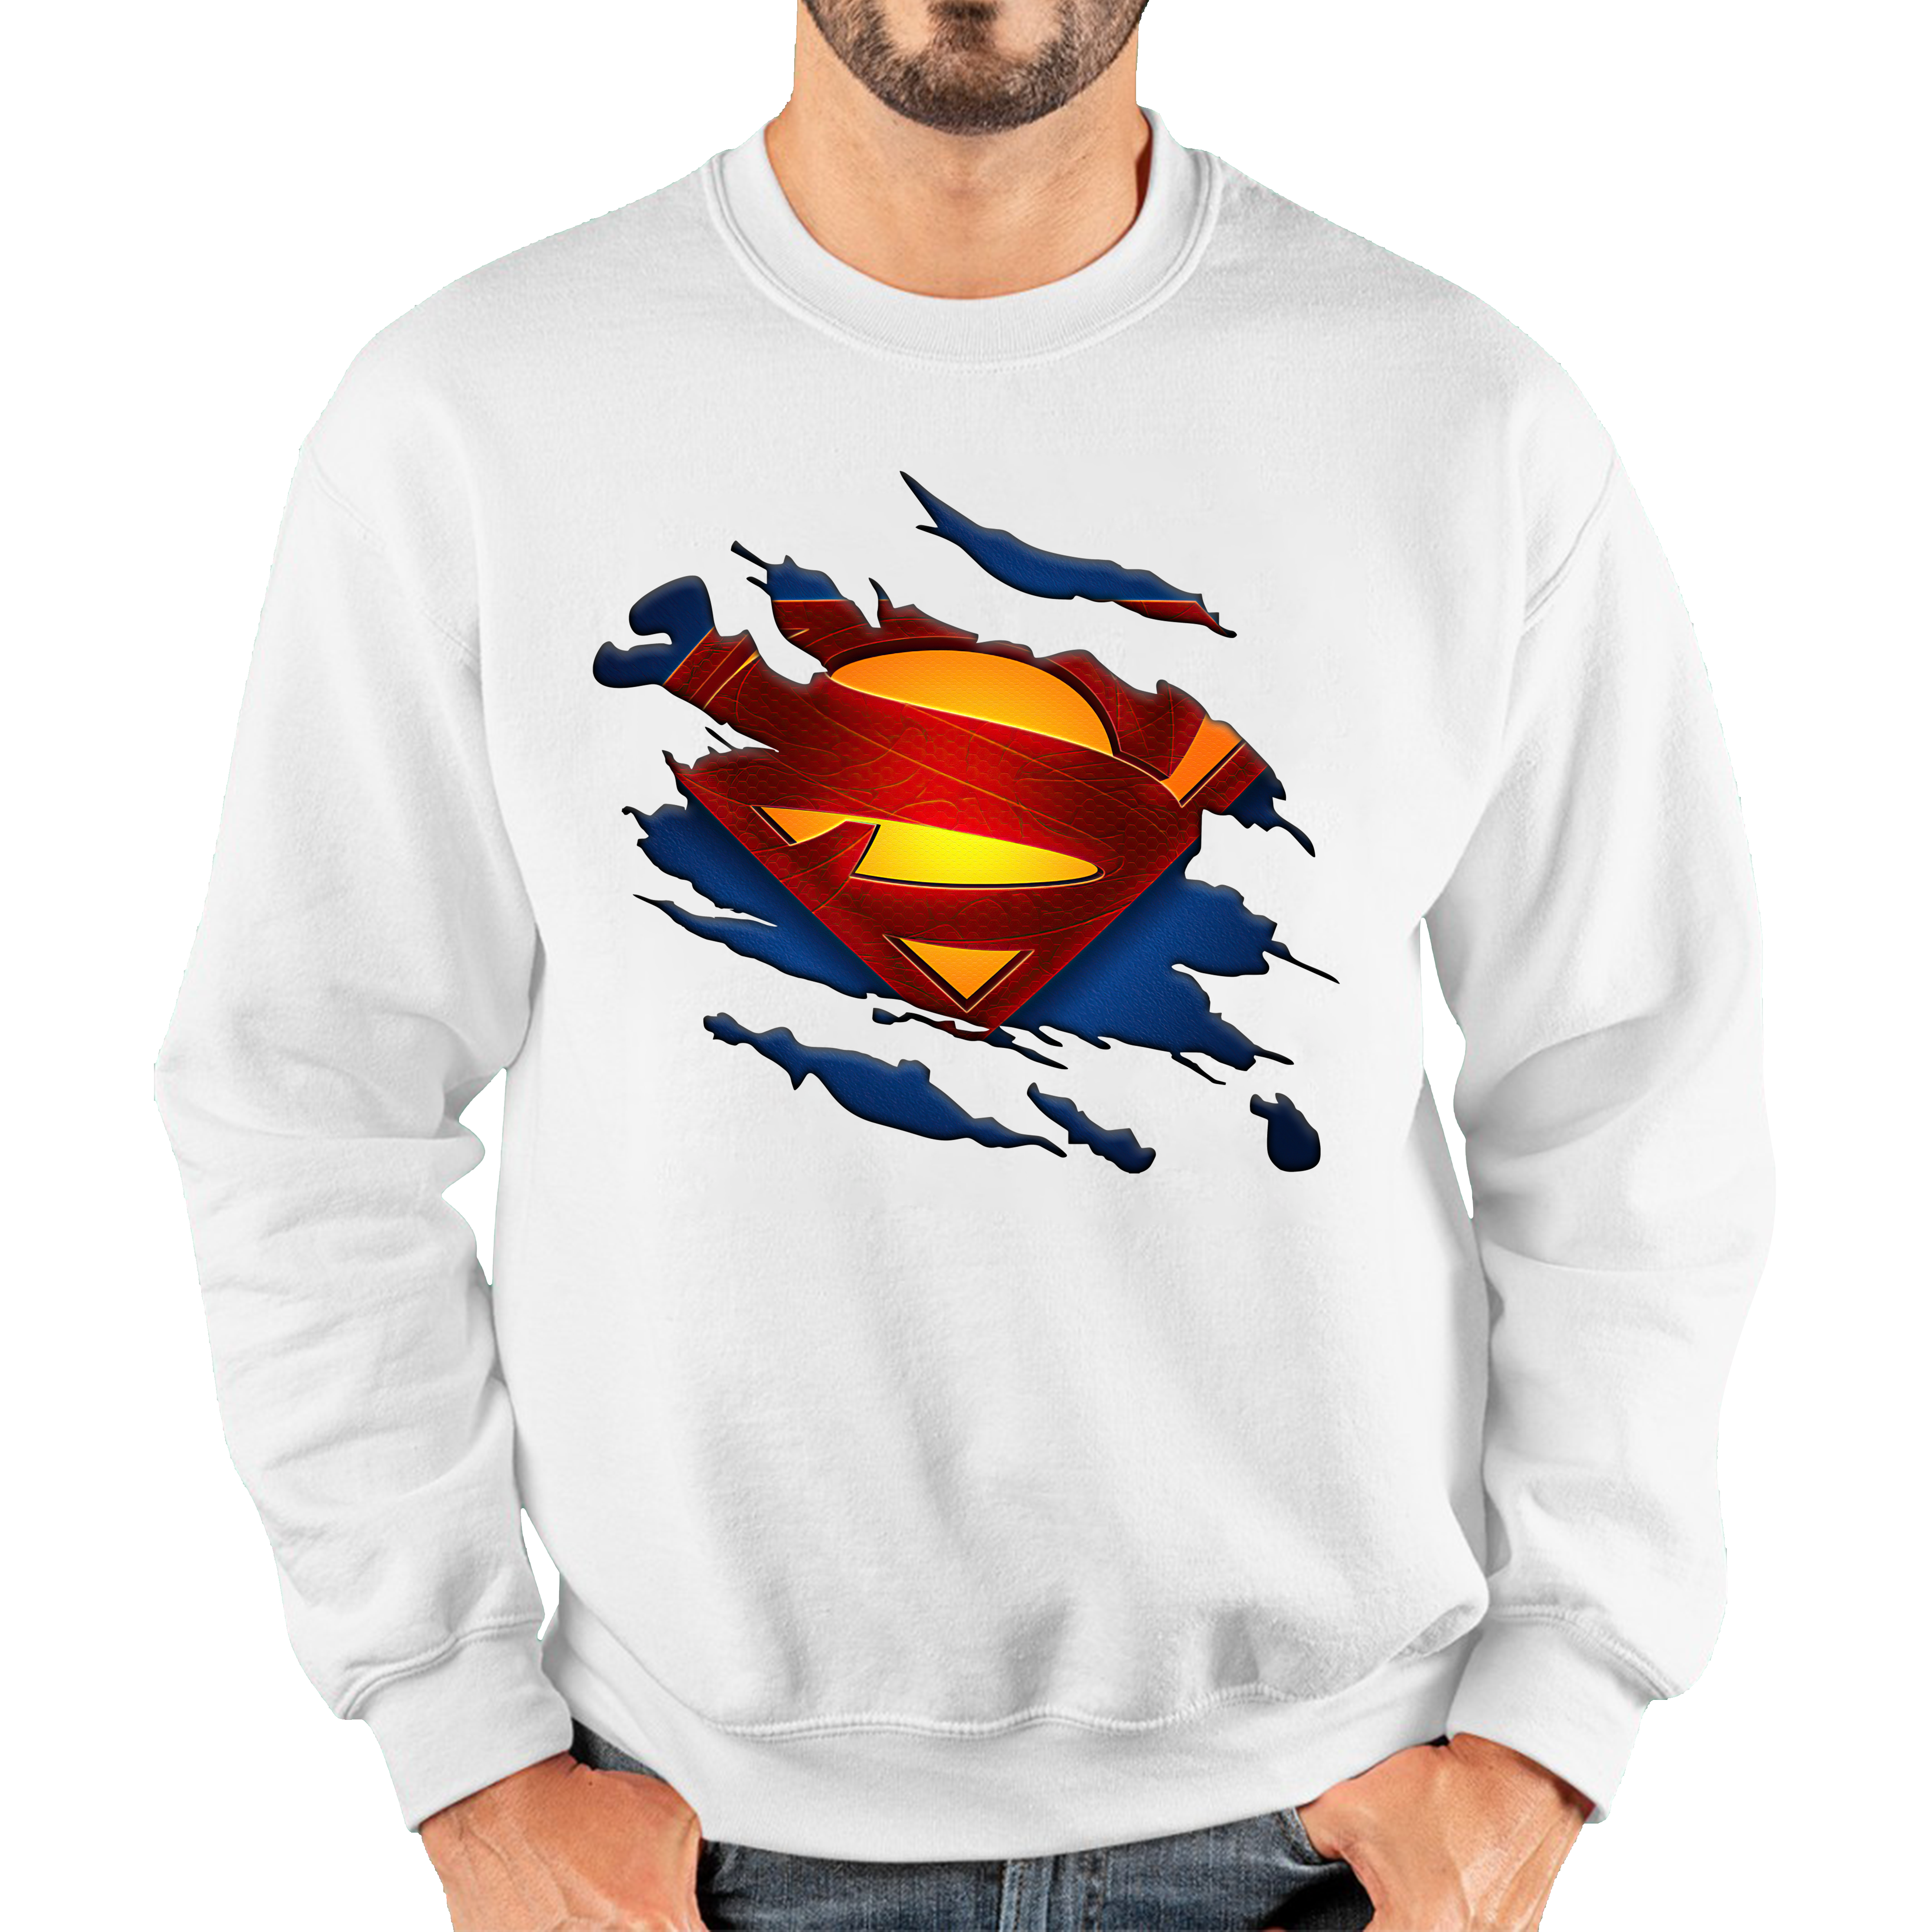 Superman Jumper Fictional Character Superhero Universe Series DC Comics Unisex Sweatshirt